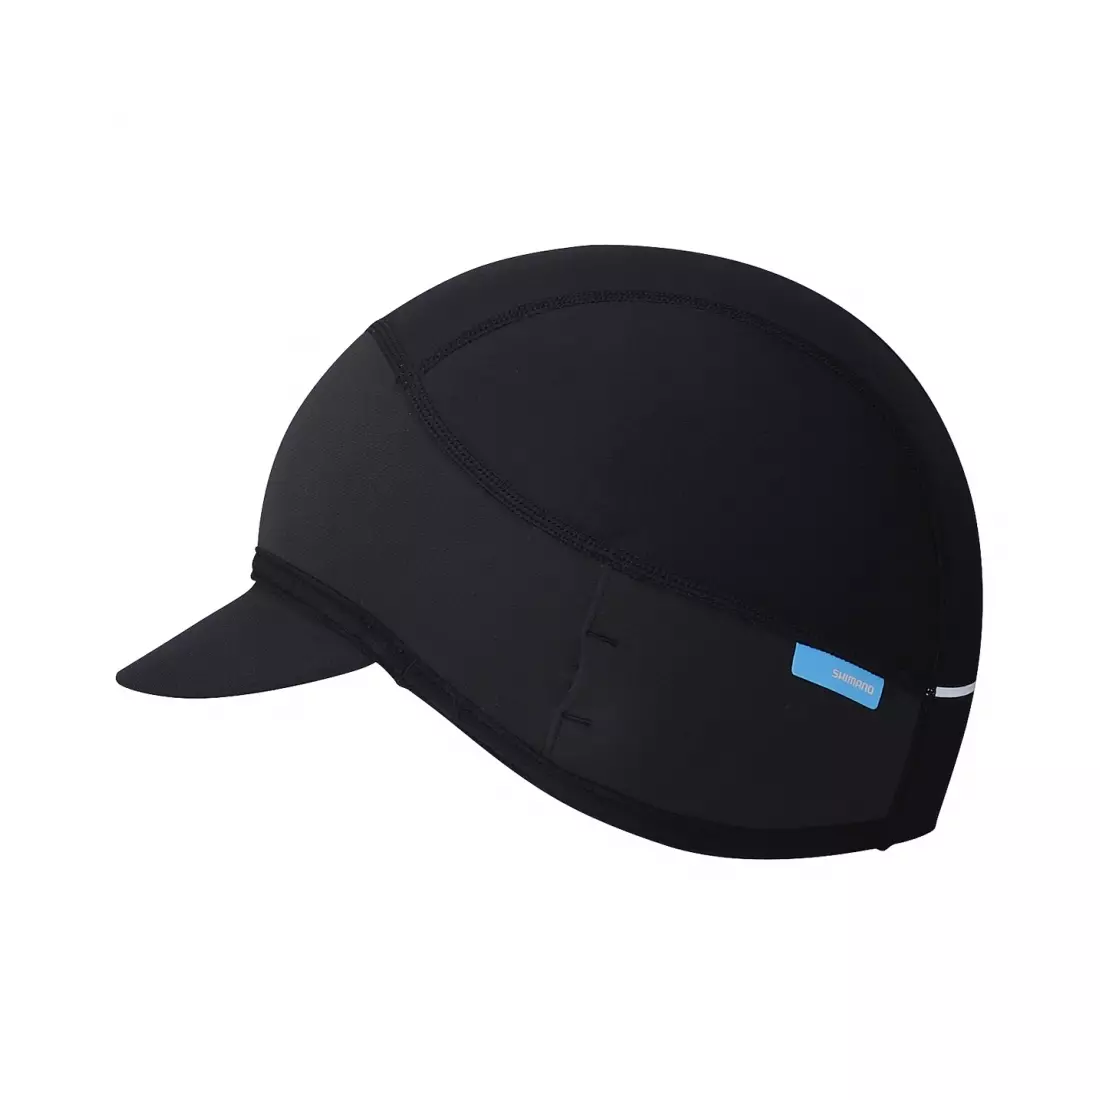 SHIMANO AW17 Extreme Helmet Cap ECWOABWQS21UL0 Black One Size